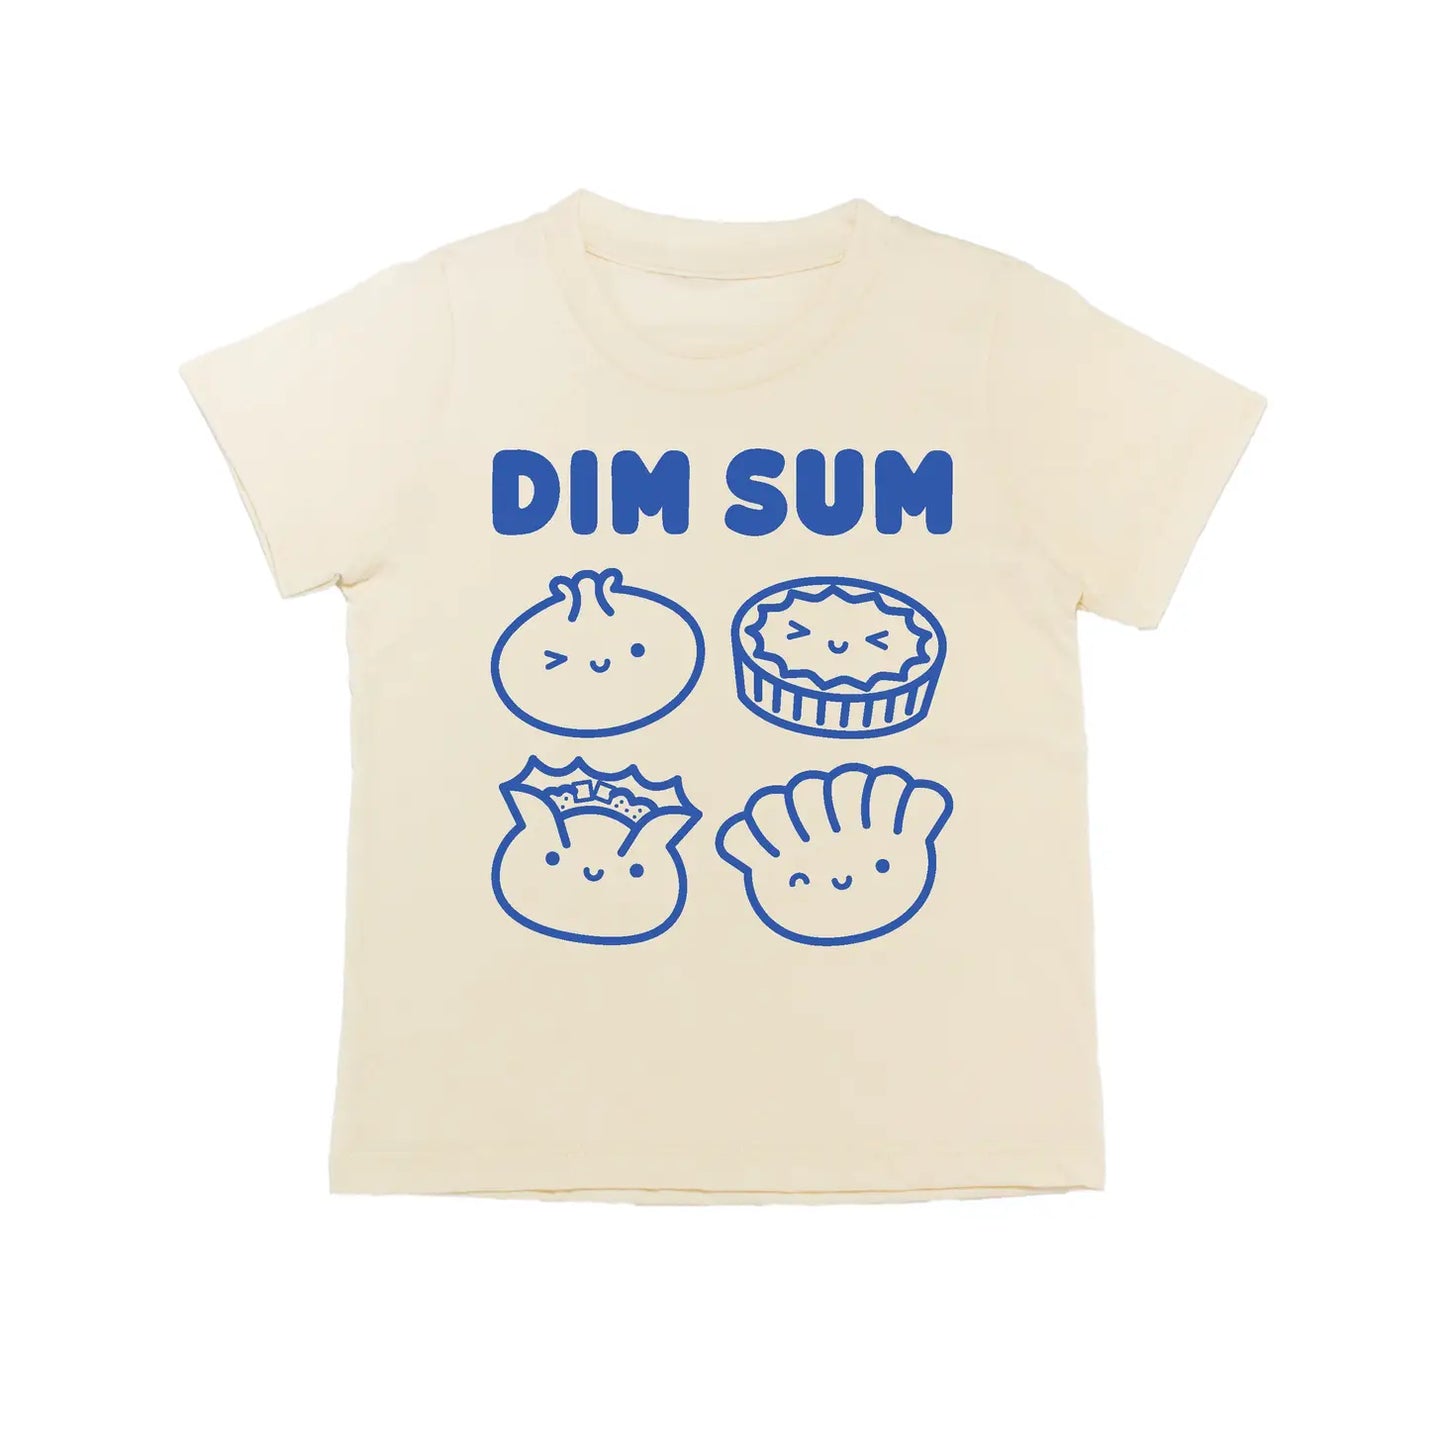 Dim Sum Adult T-Shirt